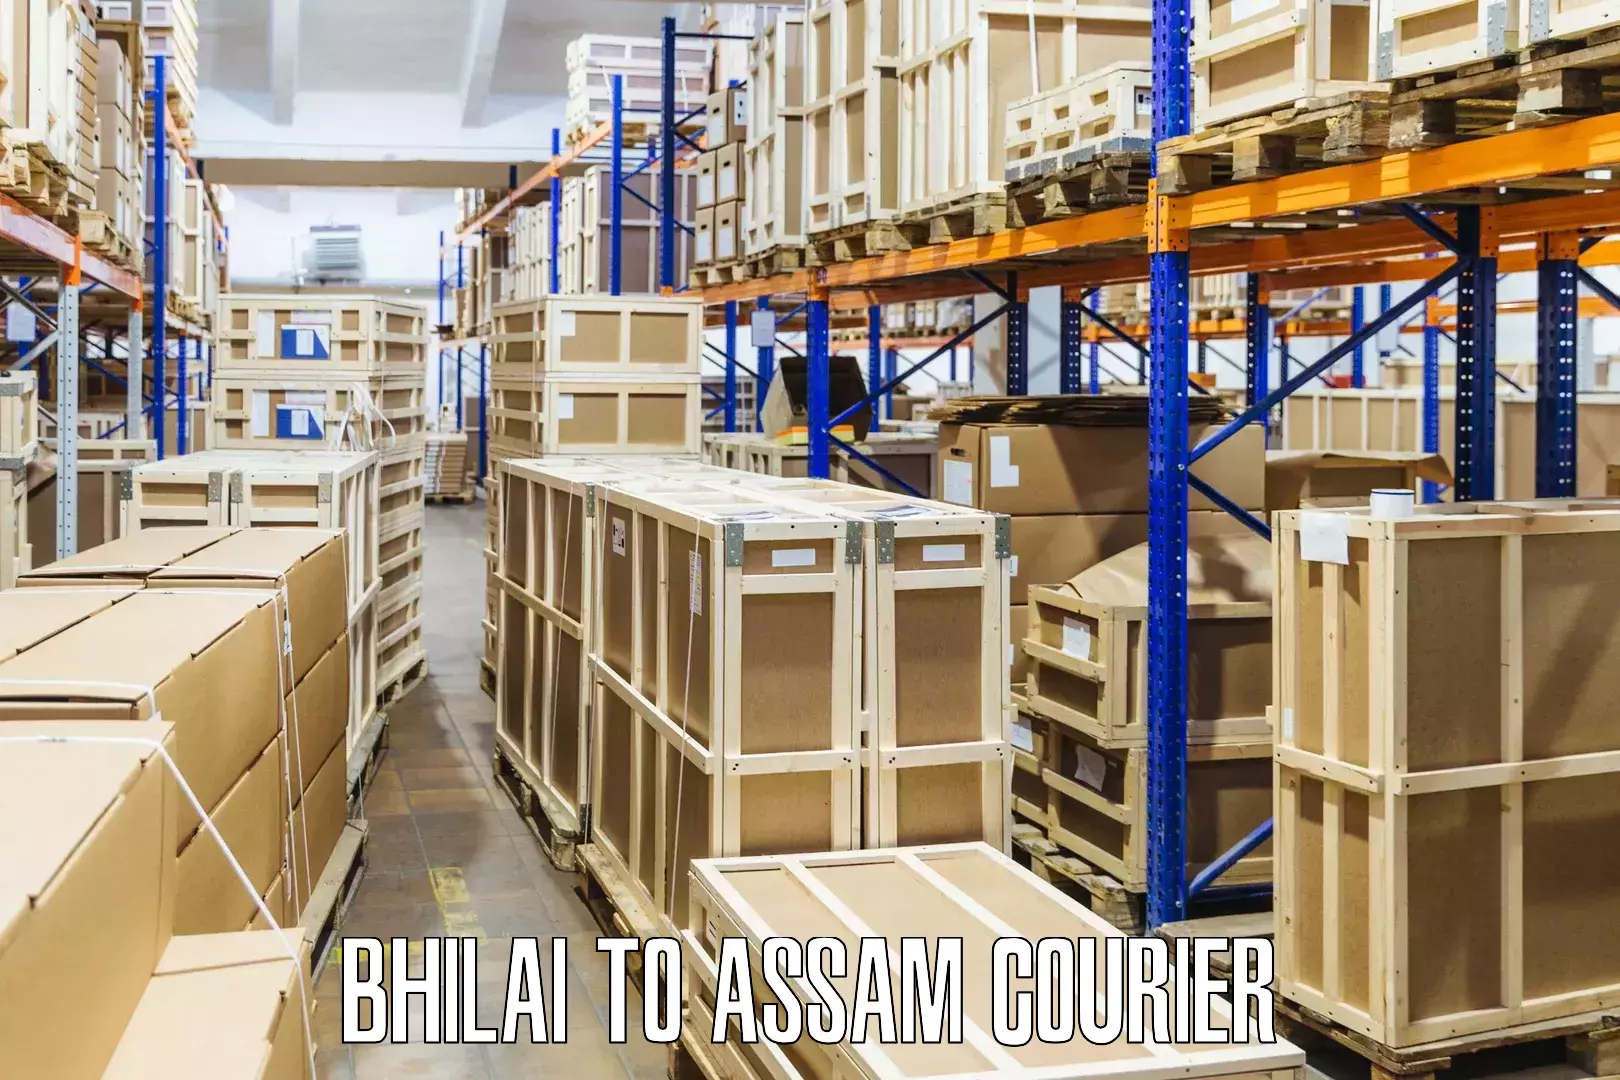 Courier service comparison in Bhilai to Assam